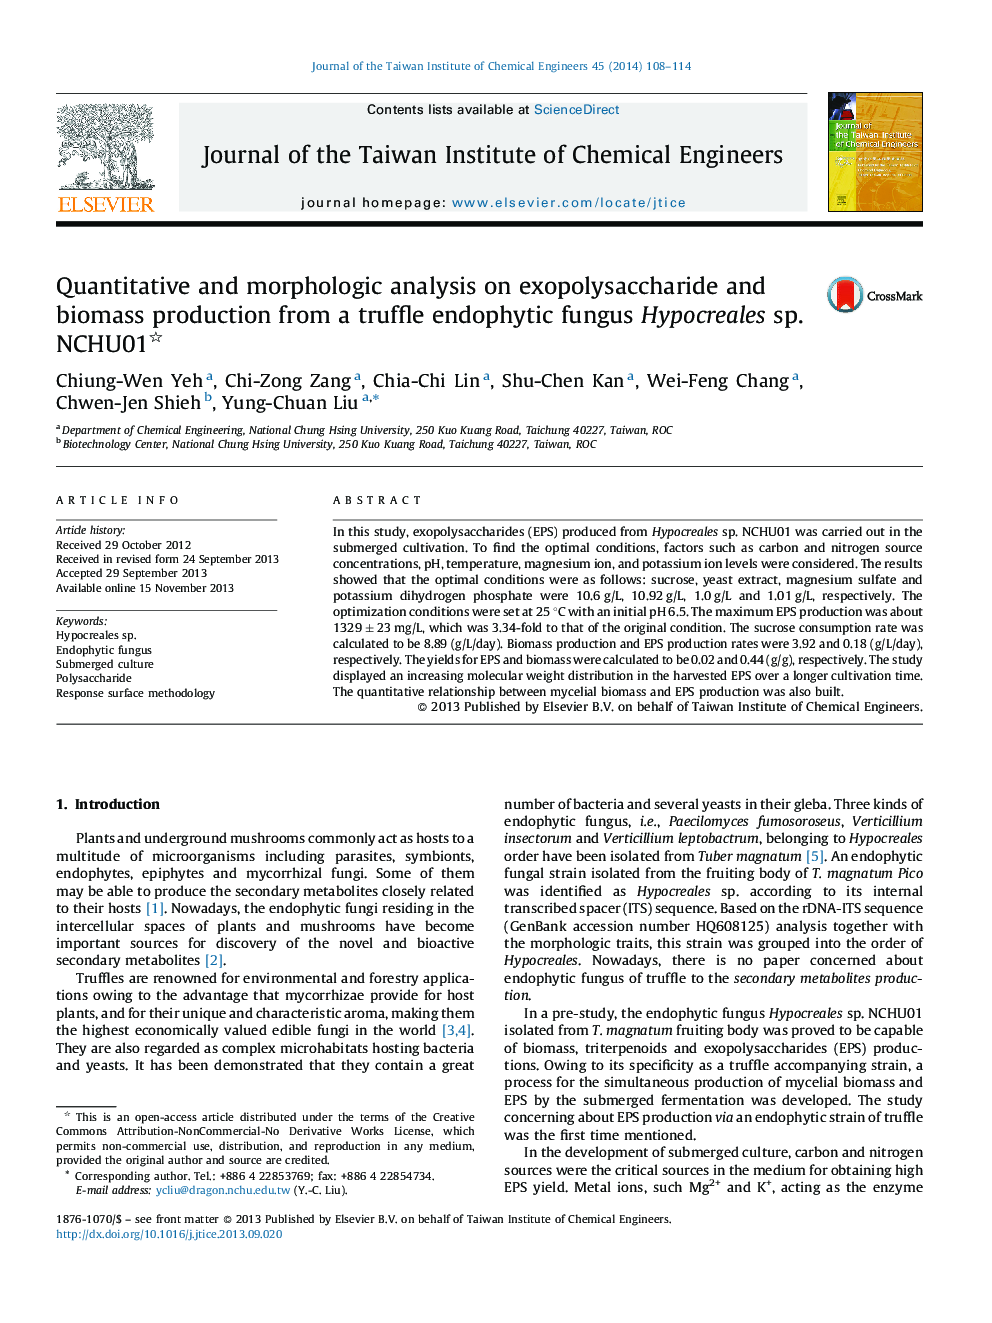 Quantitative and morphologic analysis on exopolysaccharide and biomass production from a truffle endophytic fungus Hypocreales sp. NCHU01 